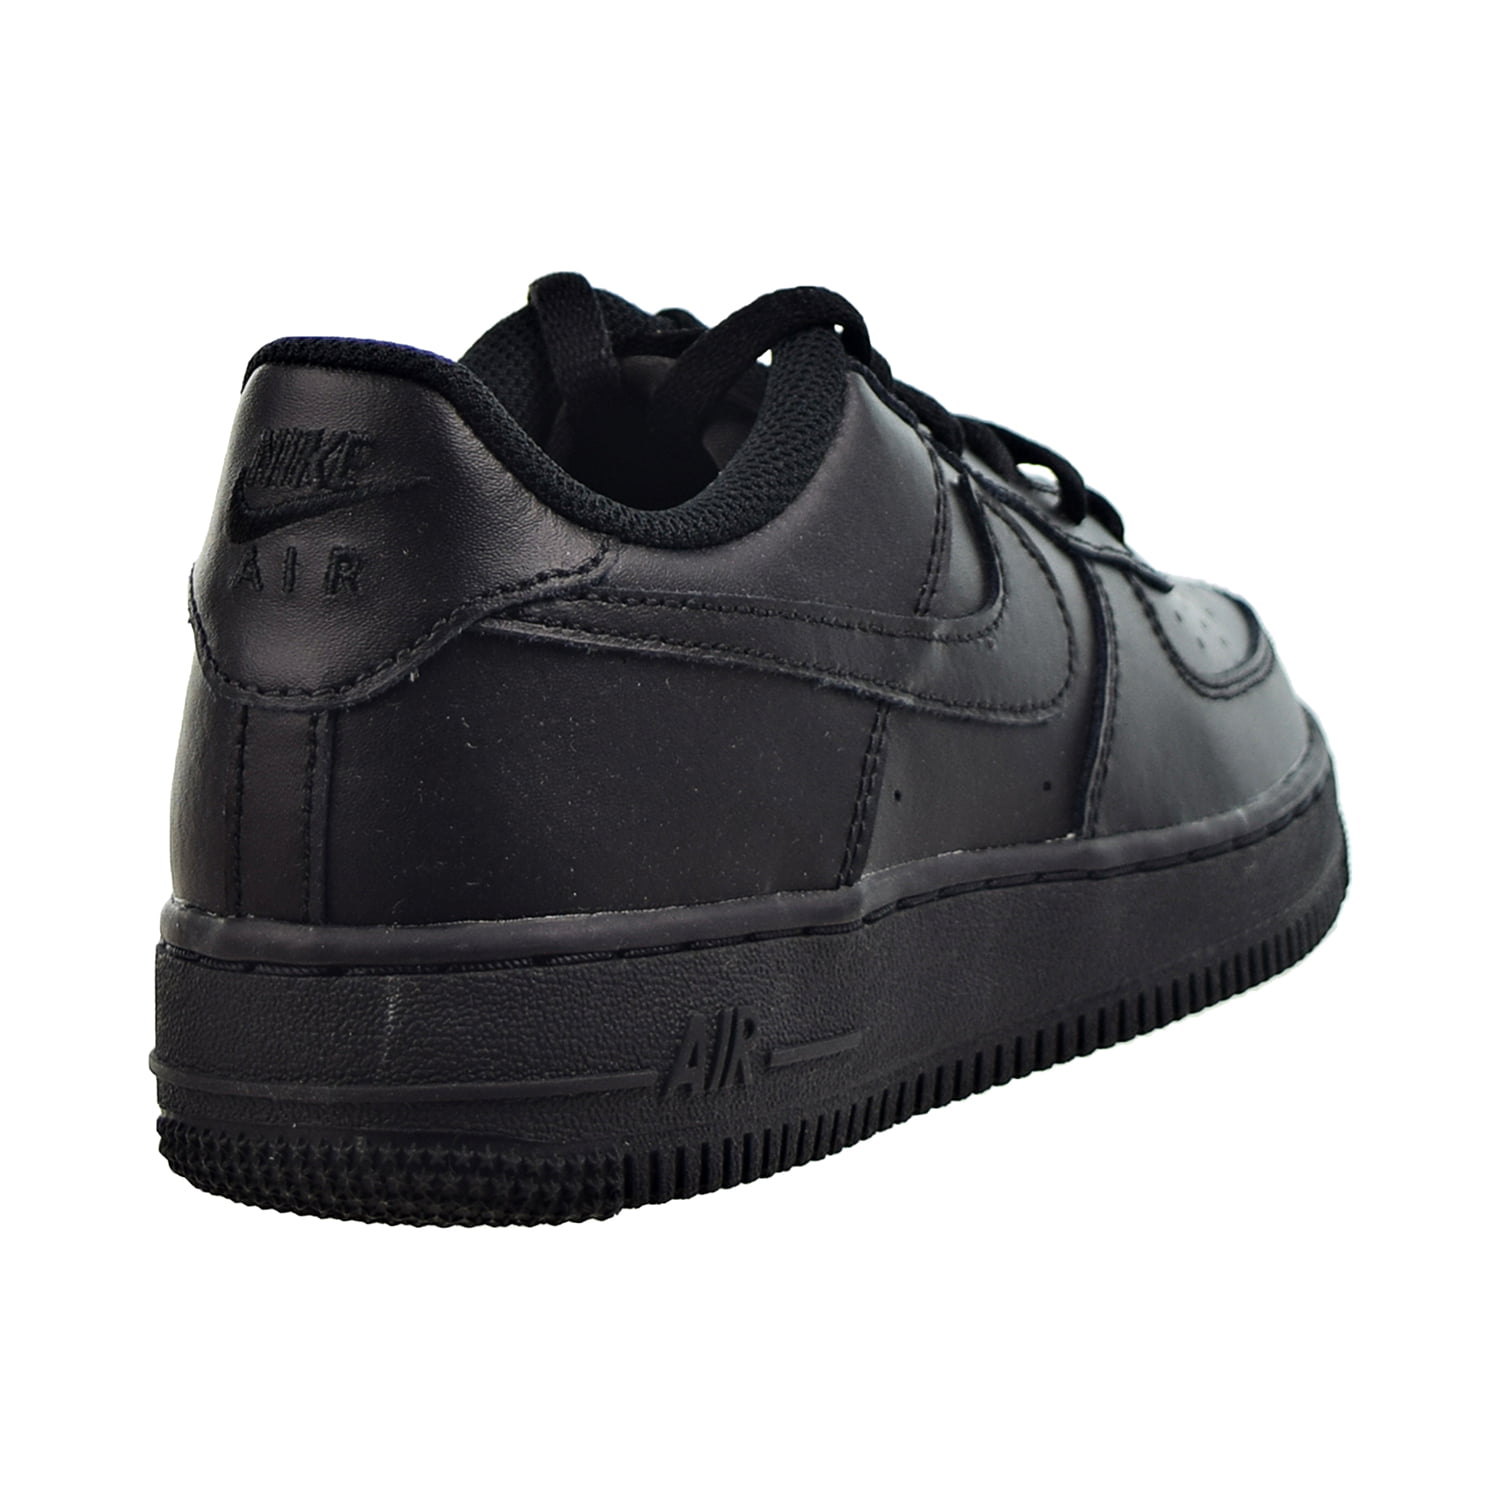 Boys Preschool - Nike Boys Air Force 1 Low Shoes Black Size 13.0